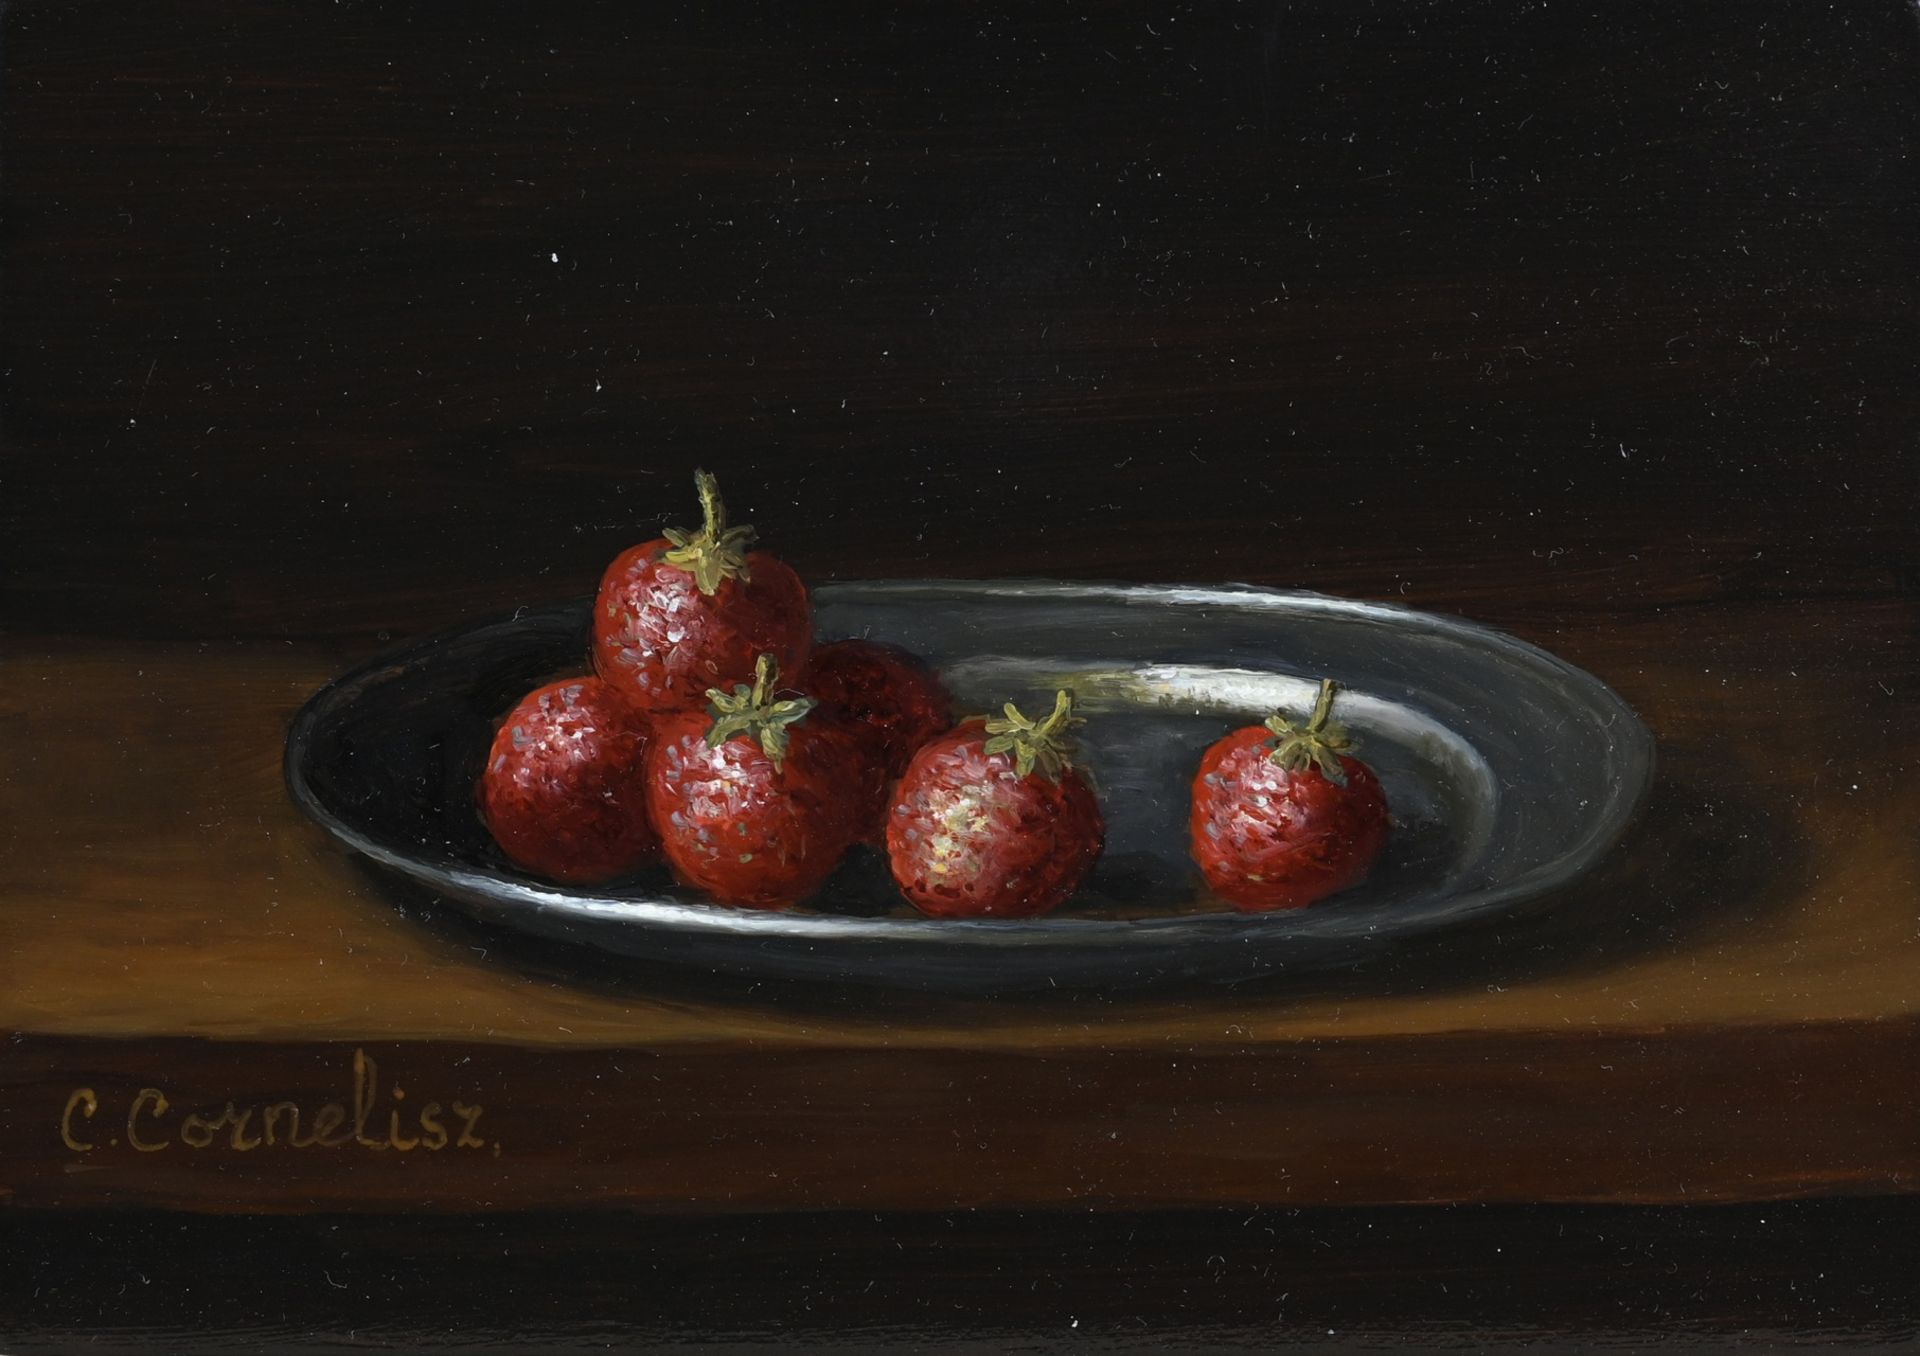 C. Cornelisz, Strawberries on a pewter plate